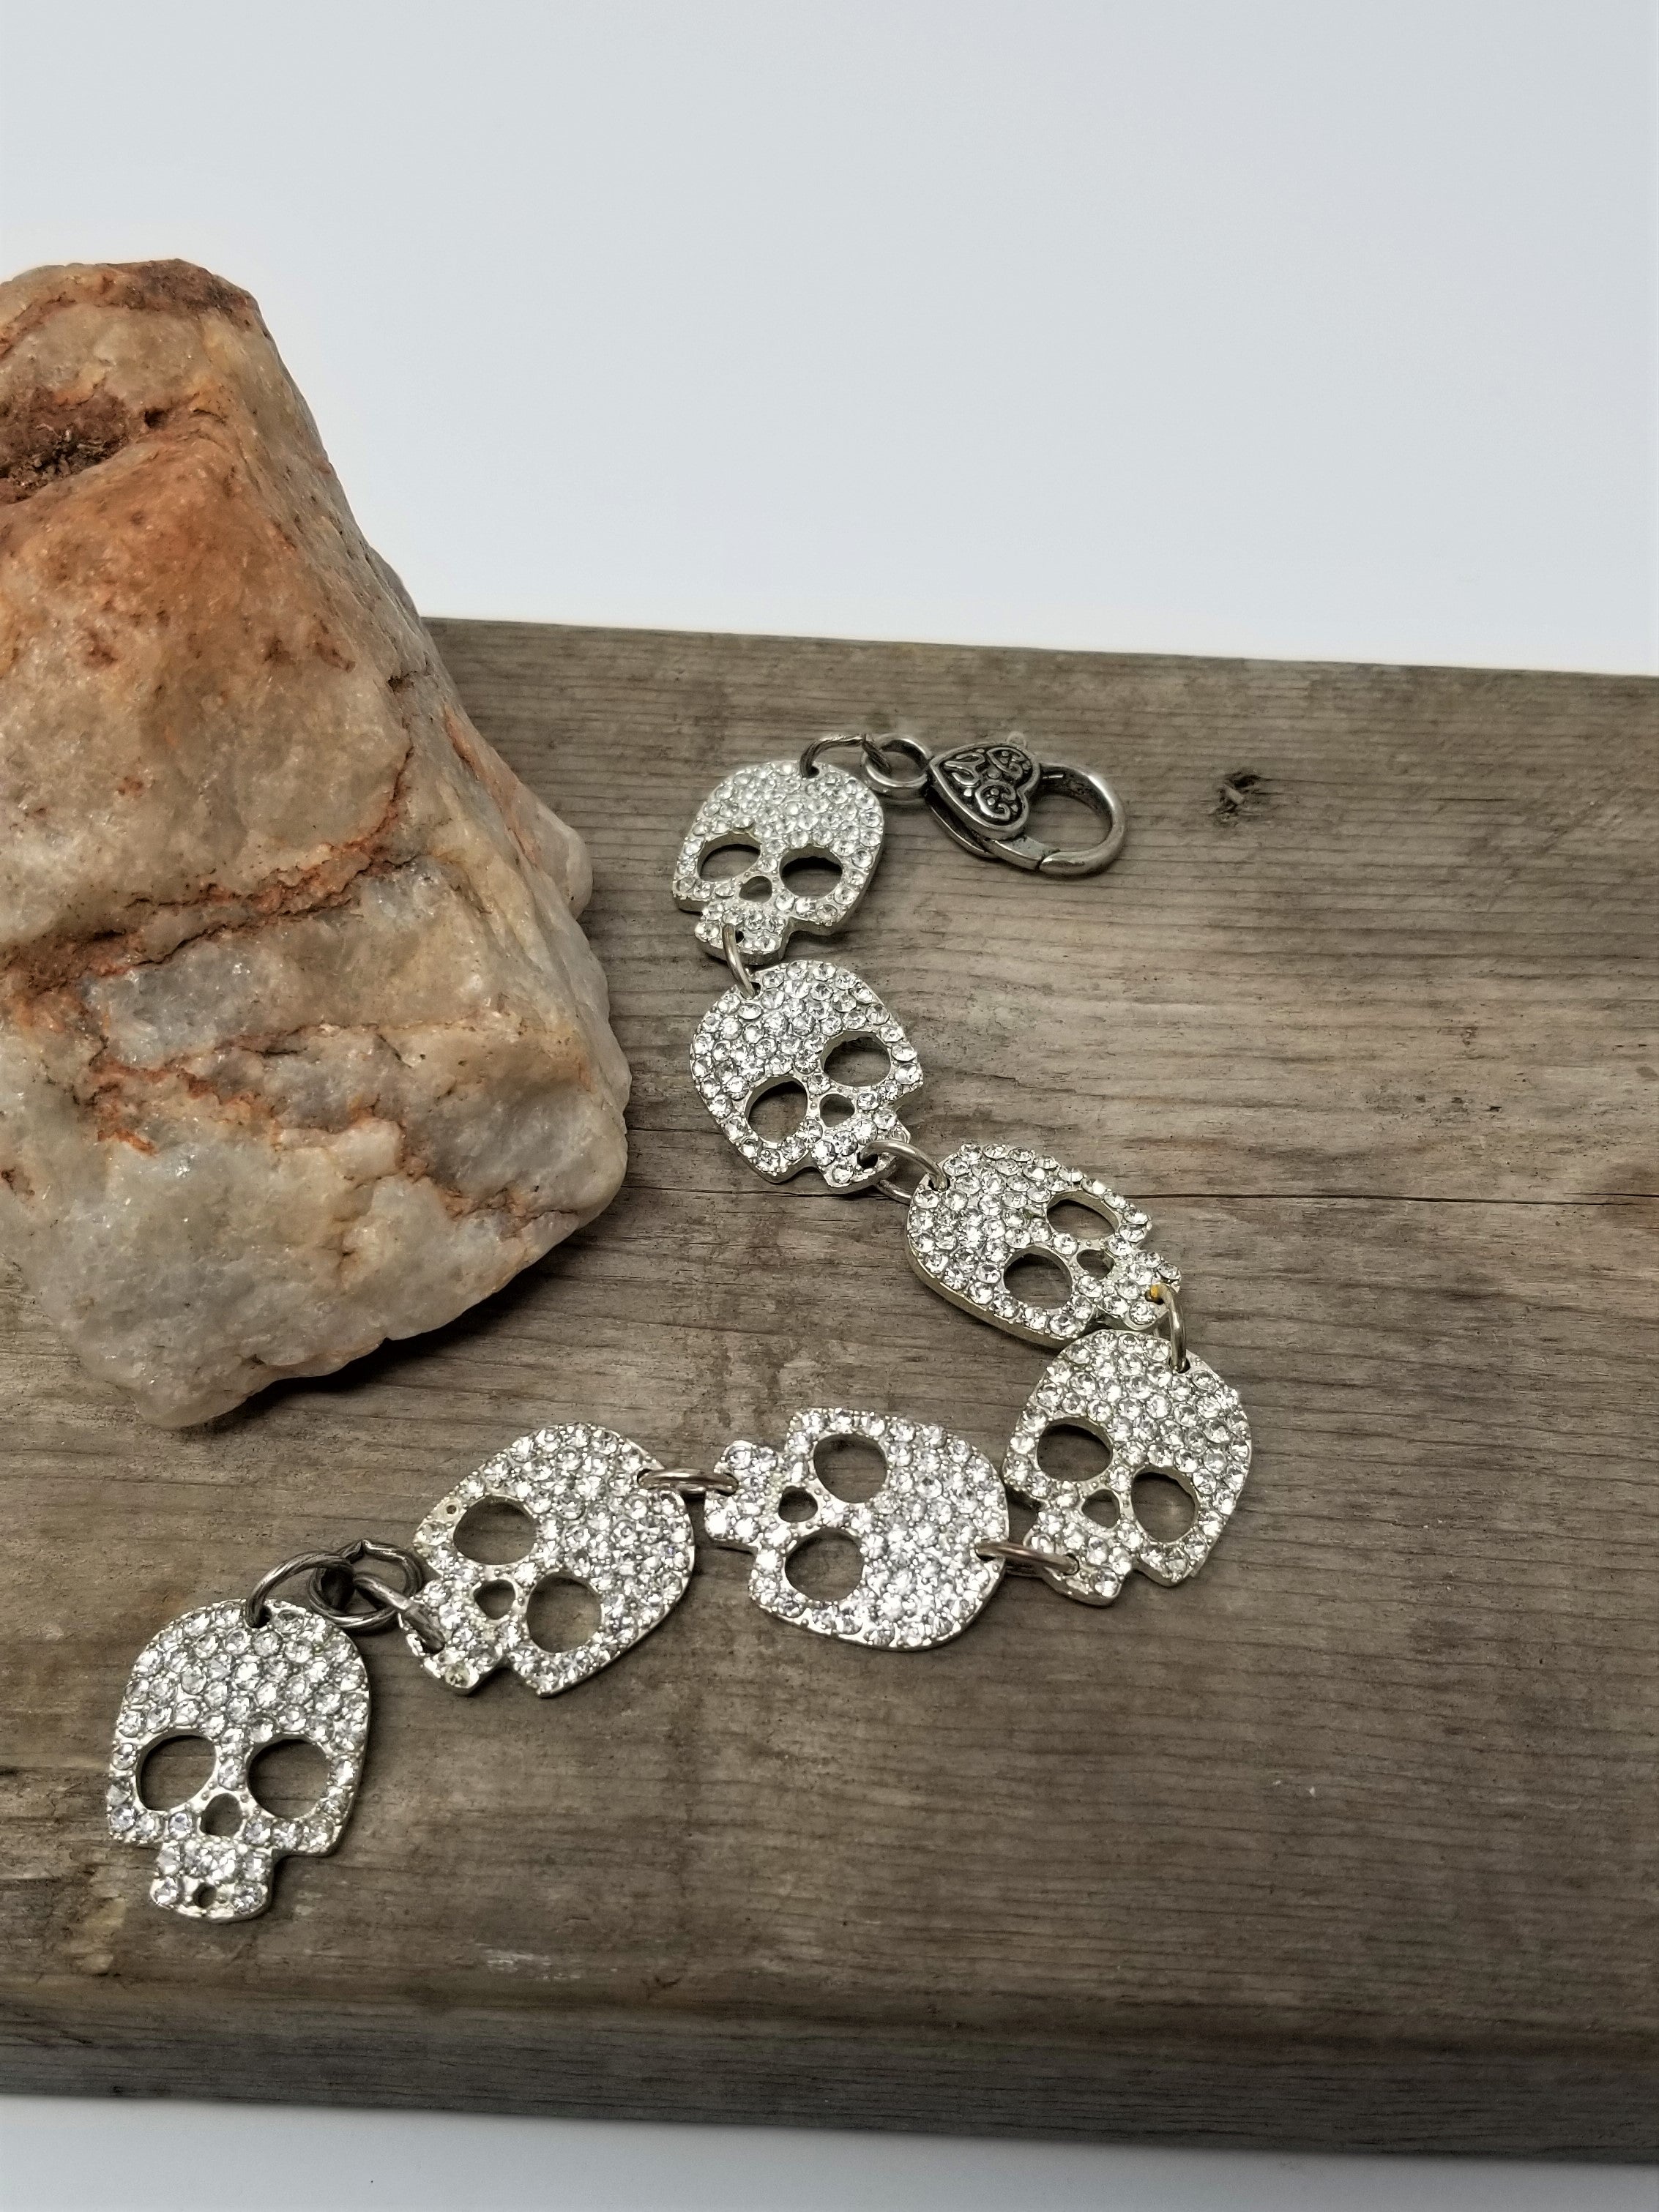 Rhinestone Skull Bracelet Silver and Sparkling